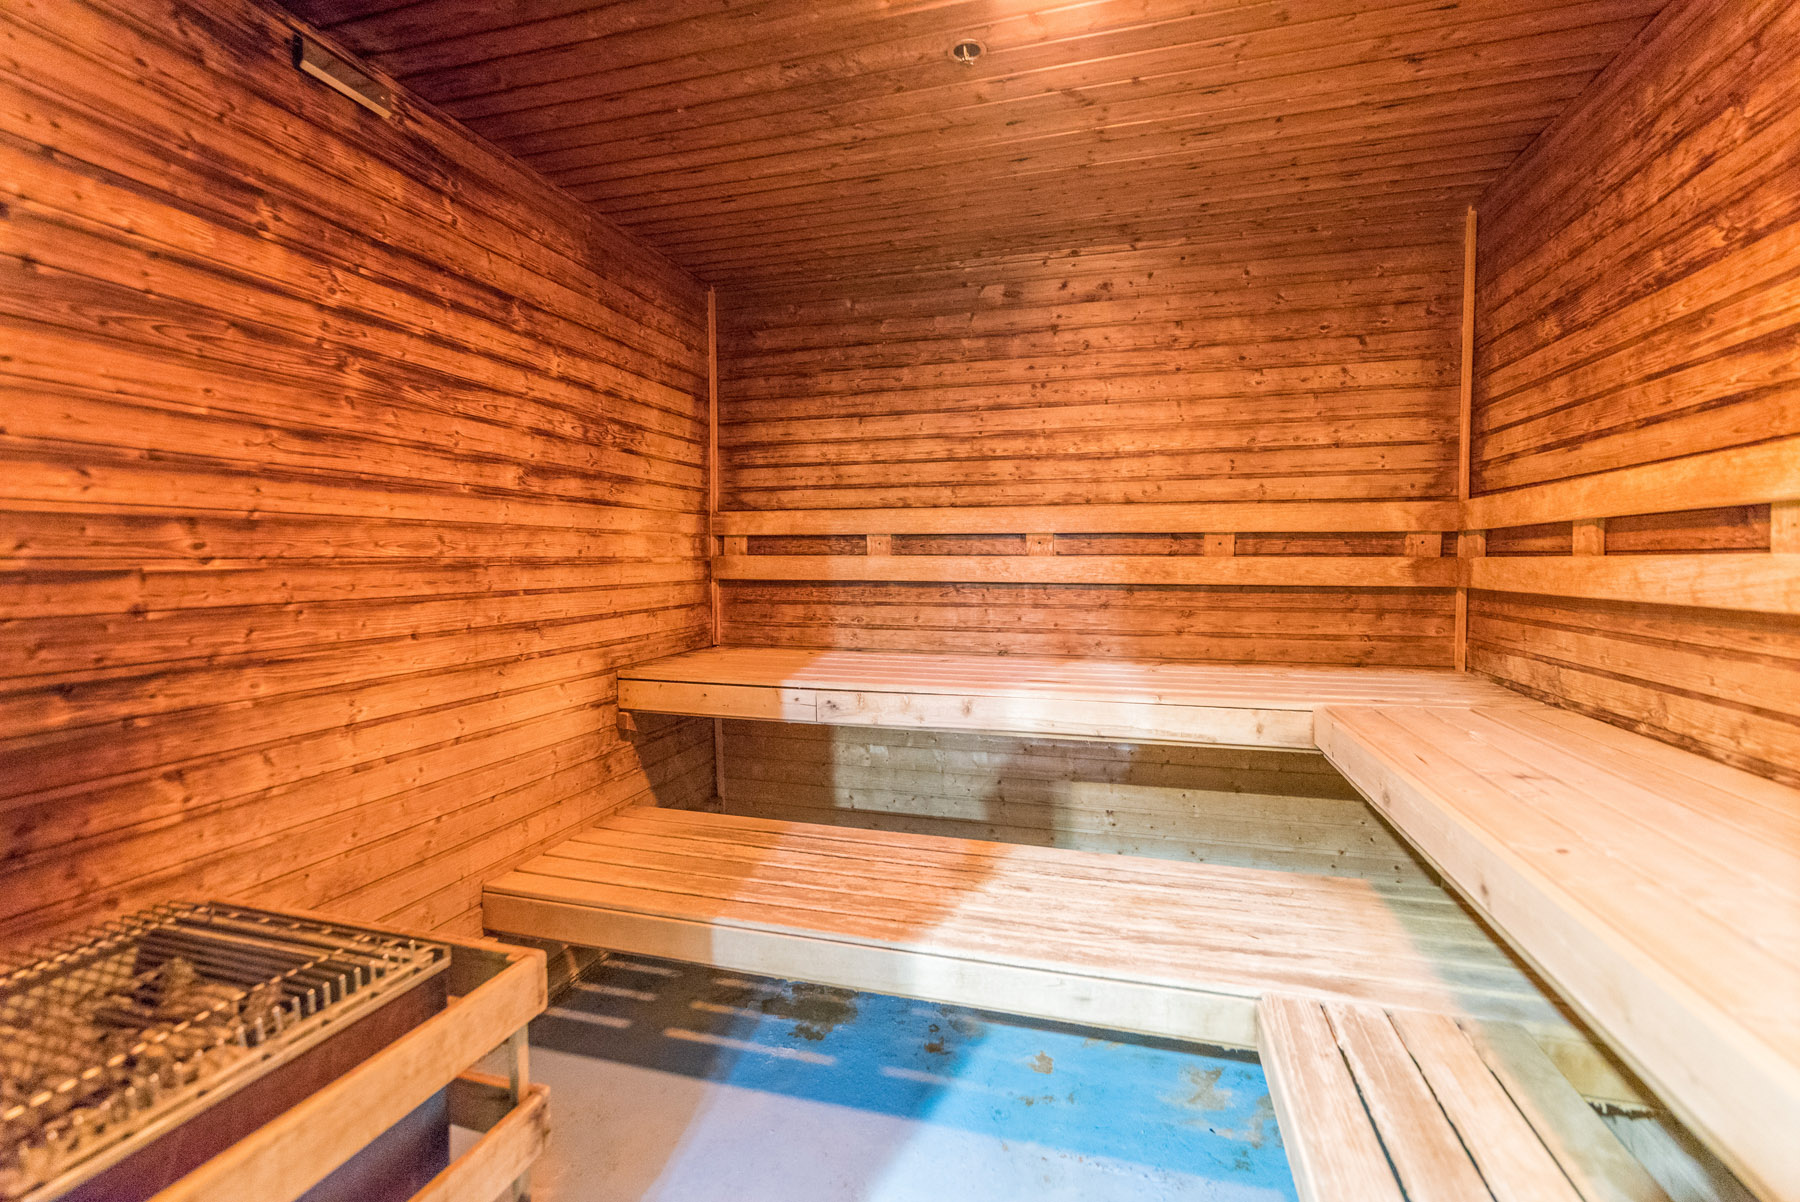 Wide-angle view of sauna